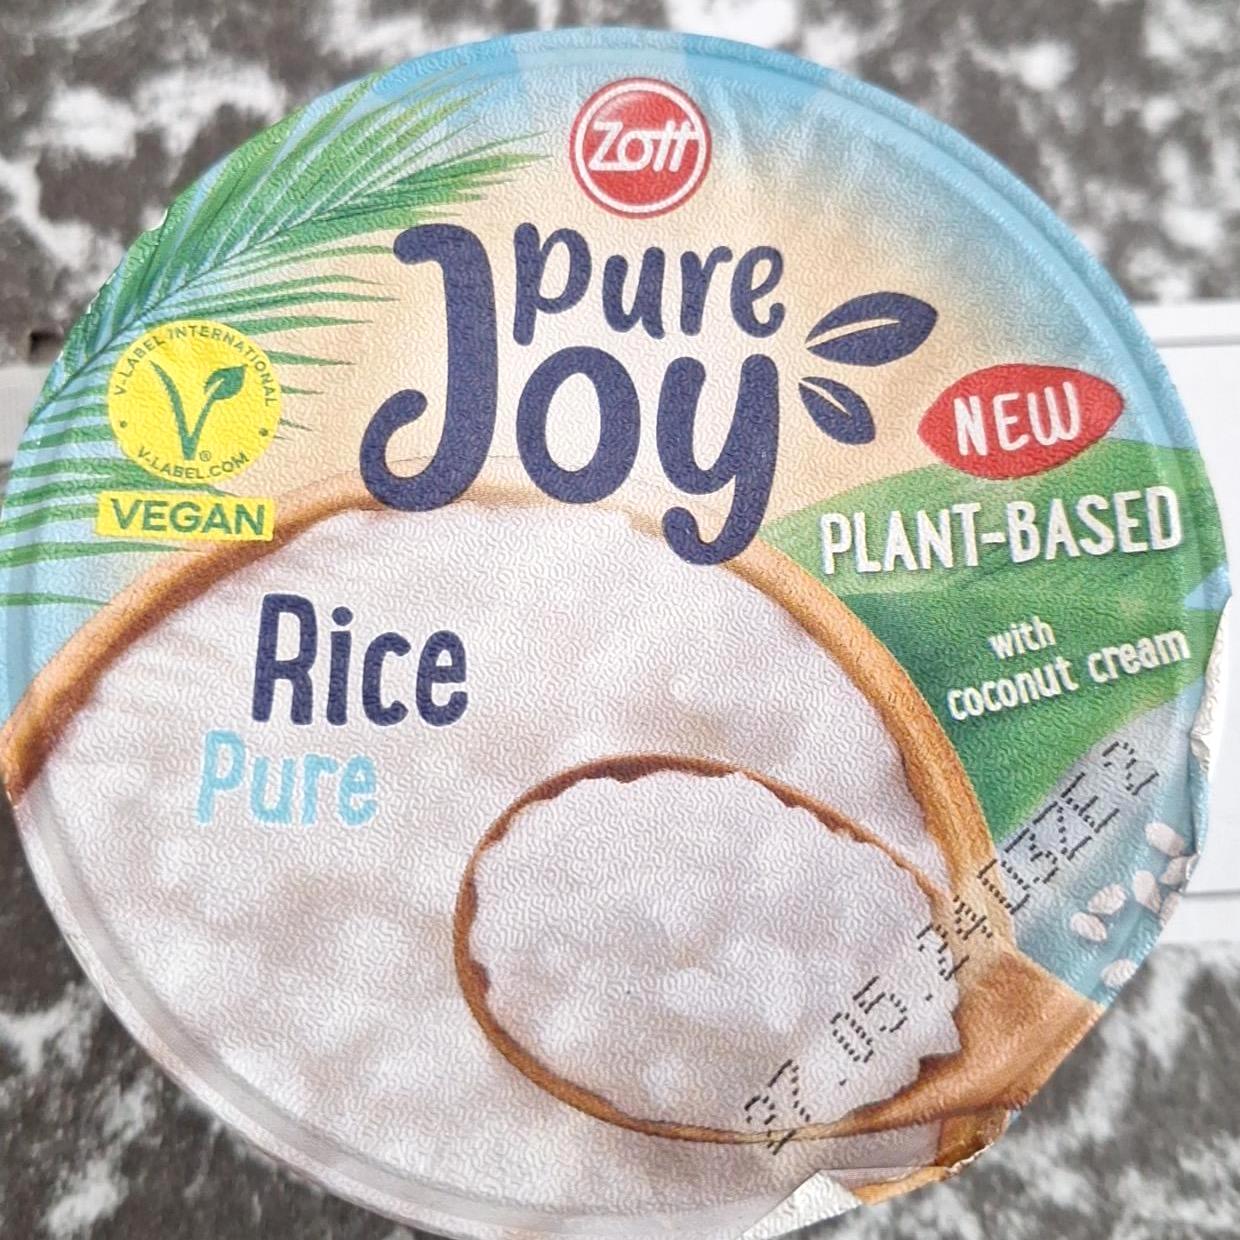 Képek - Pure joy rice pure with coconut cream Zott